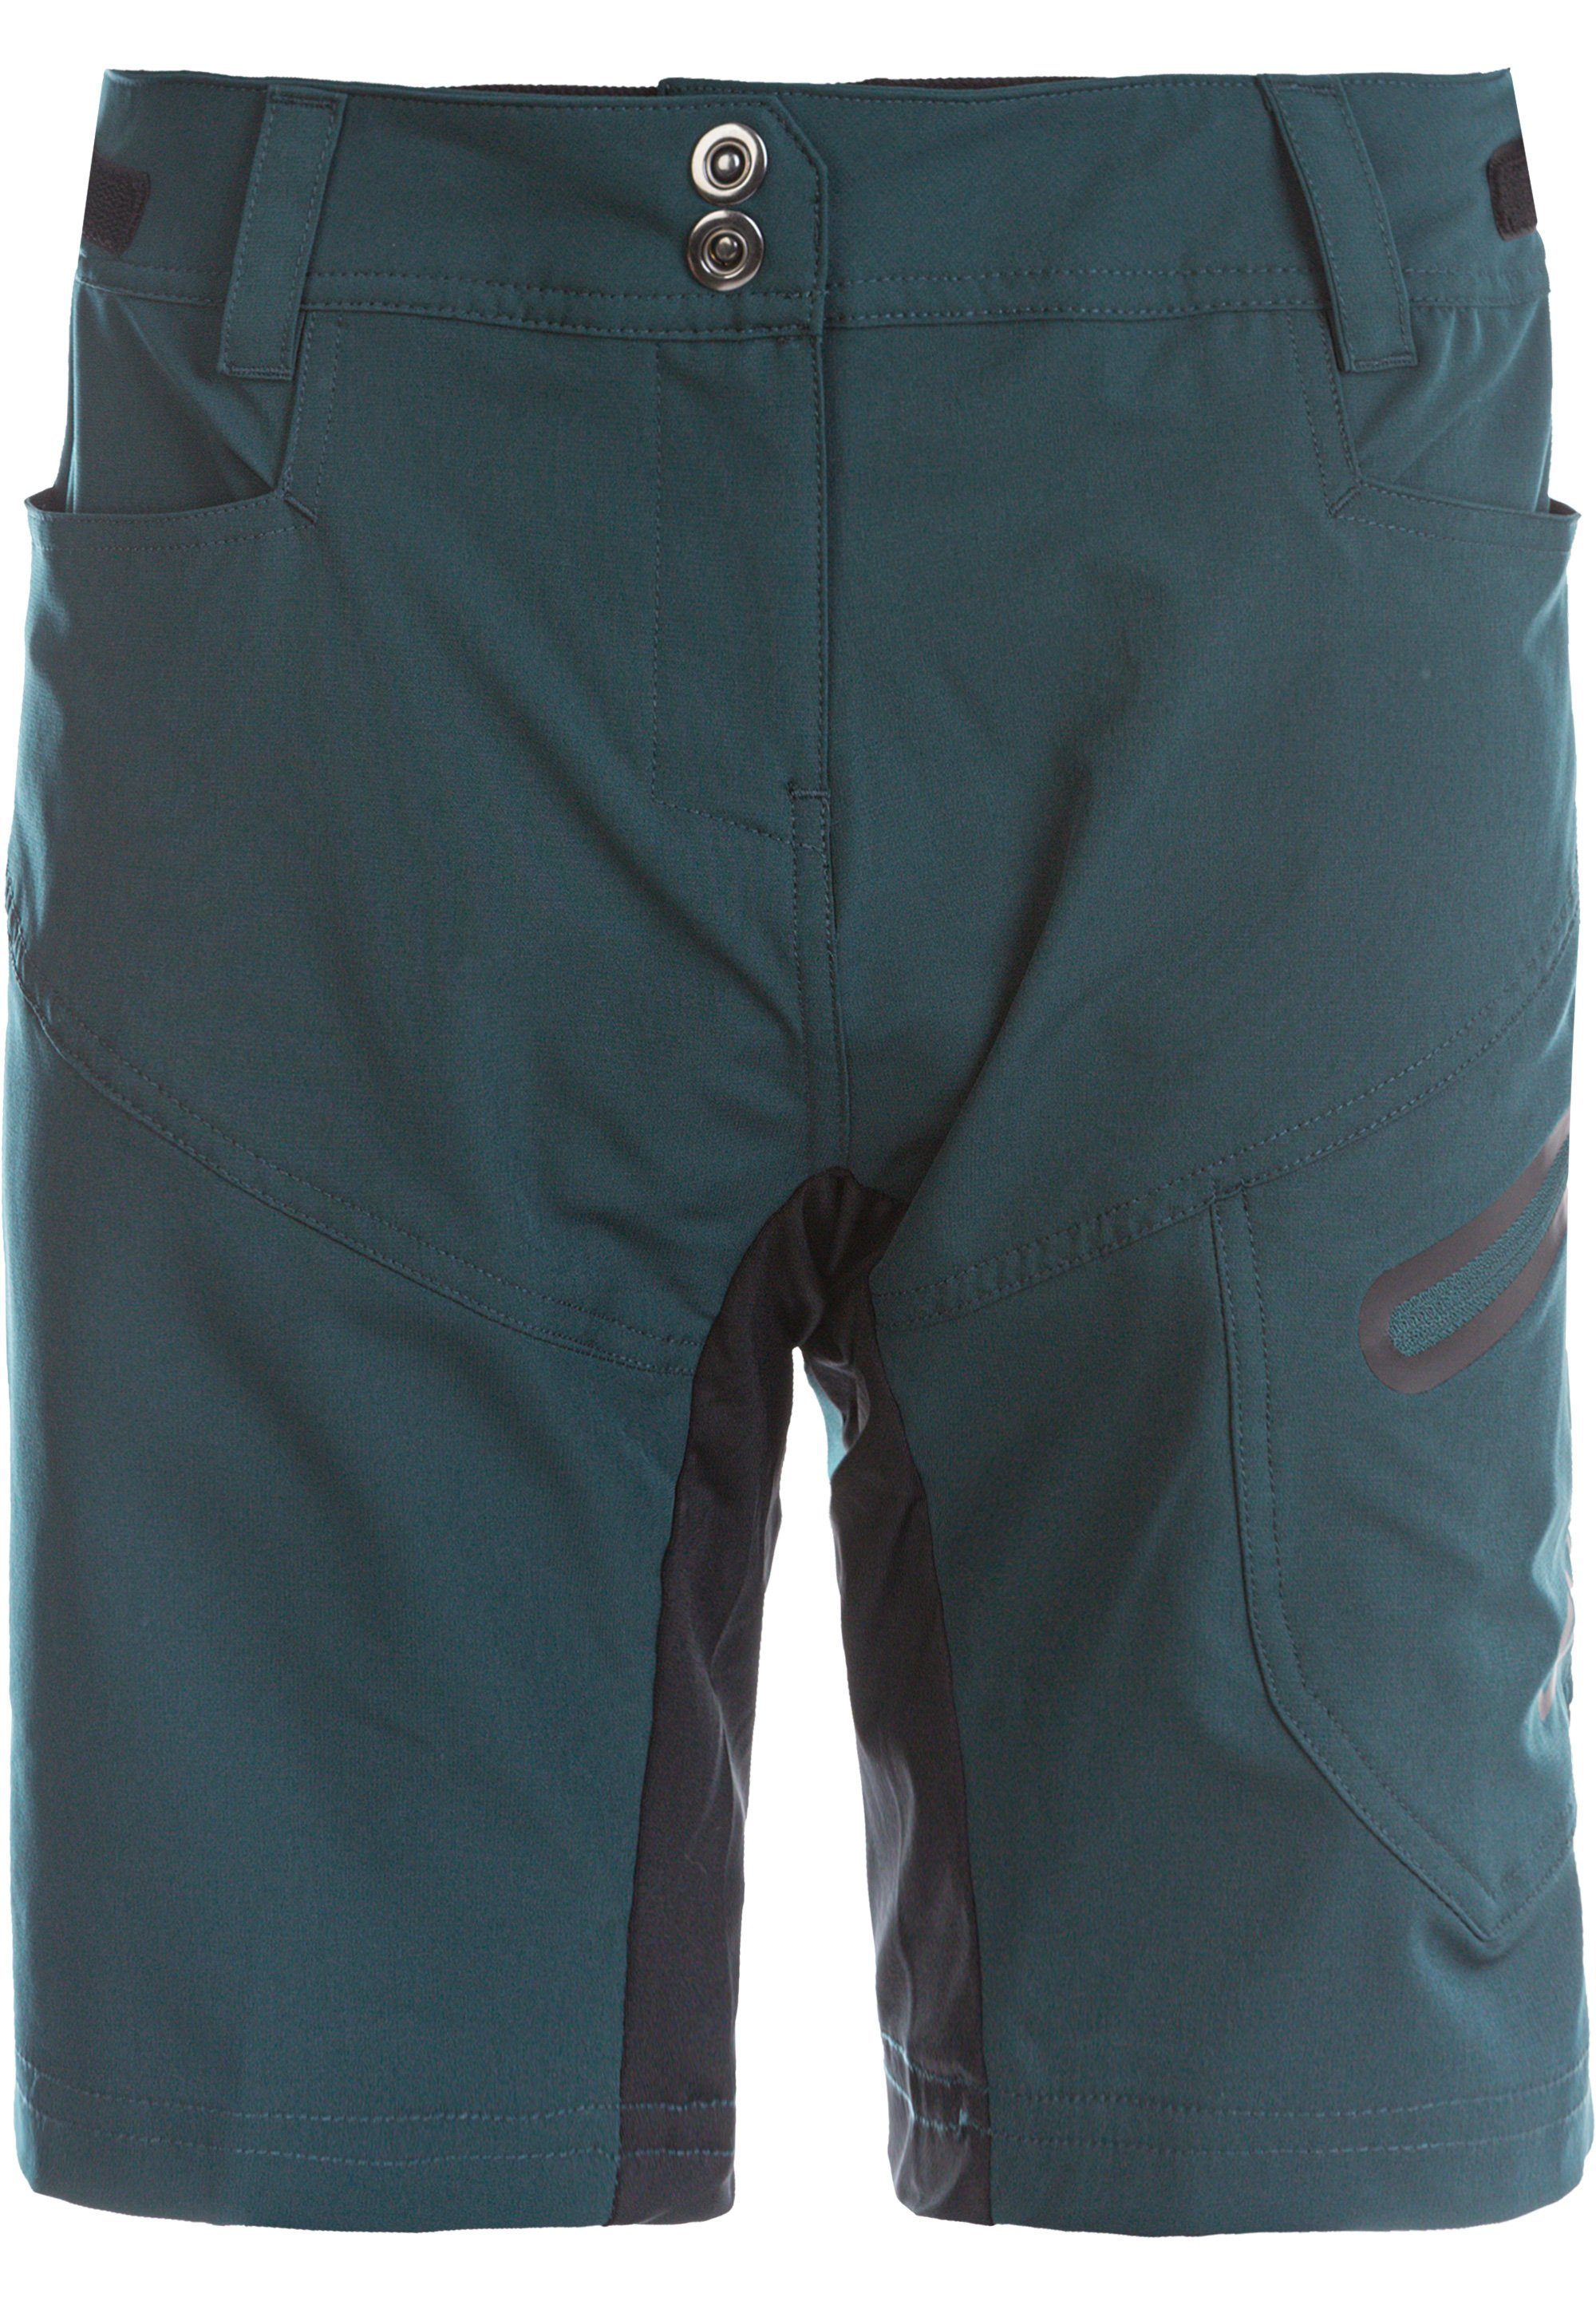 Shorts herausnehmbarer mit W Jamilla Radhose 1 2 Innen-Tights in dunkelgrün ENDURANCE